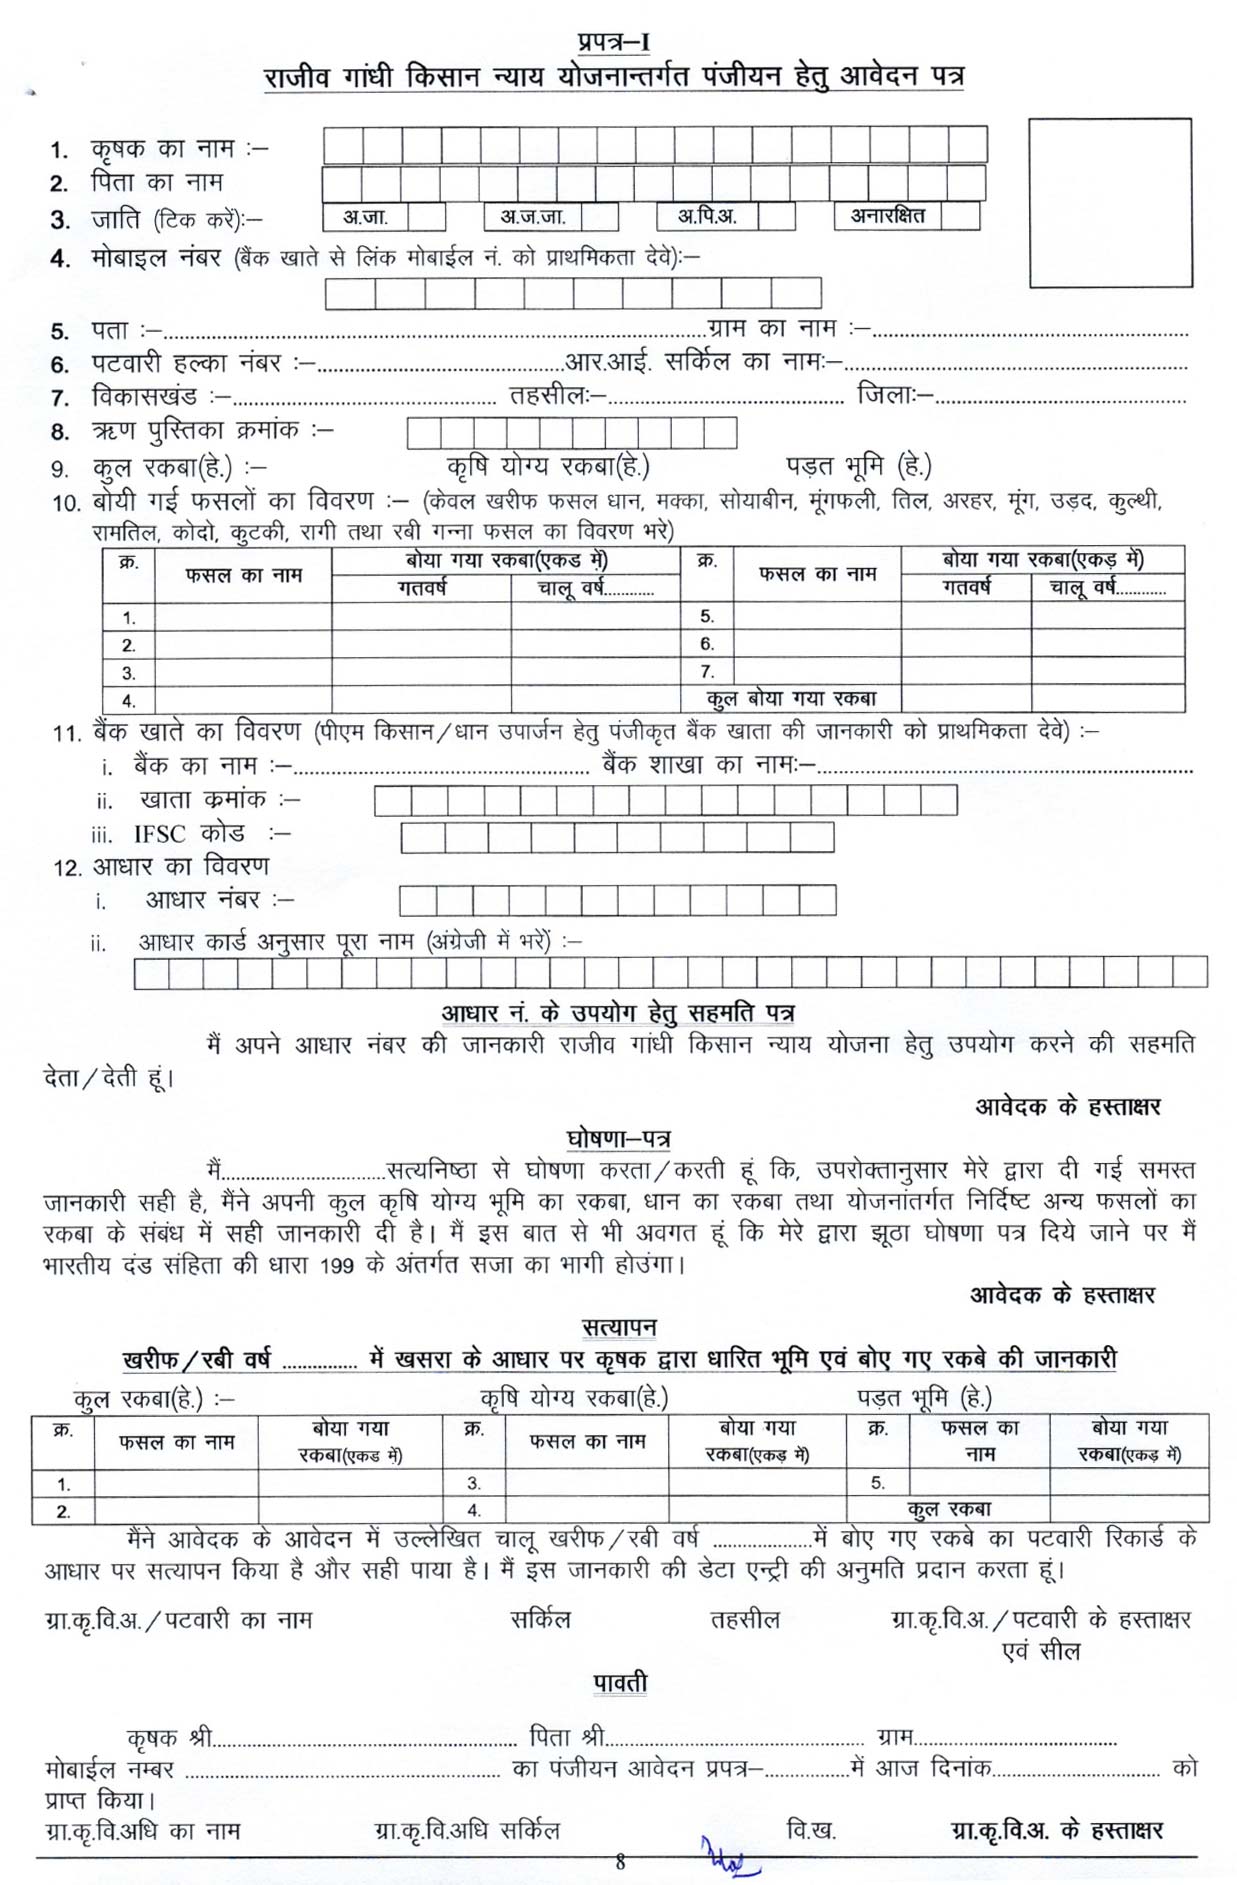 Rajiv Gandhi Kisan Nyay Yojana Application / Registration Form